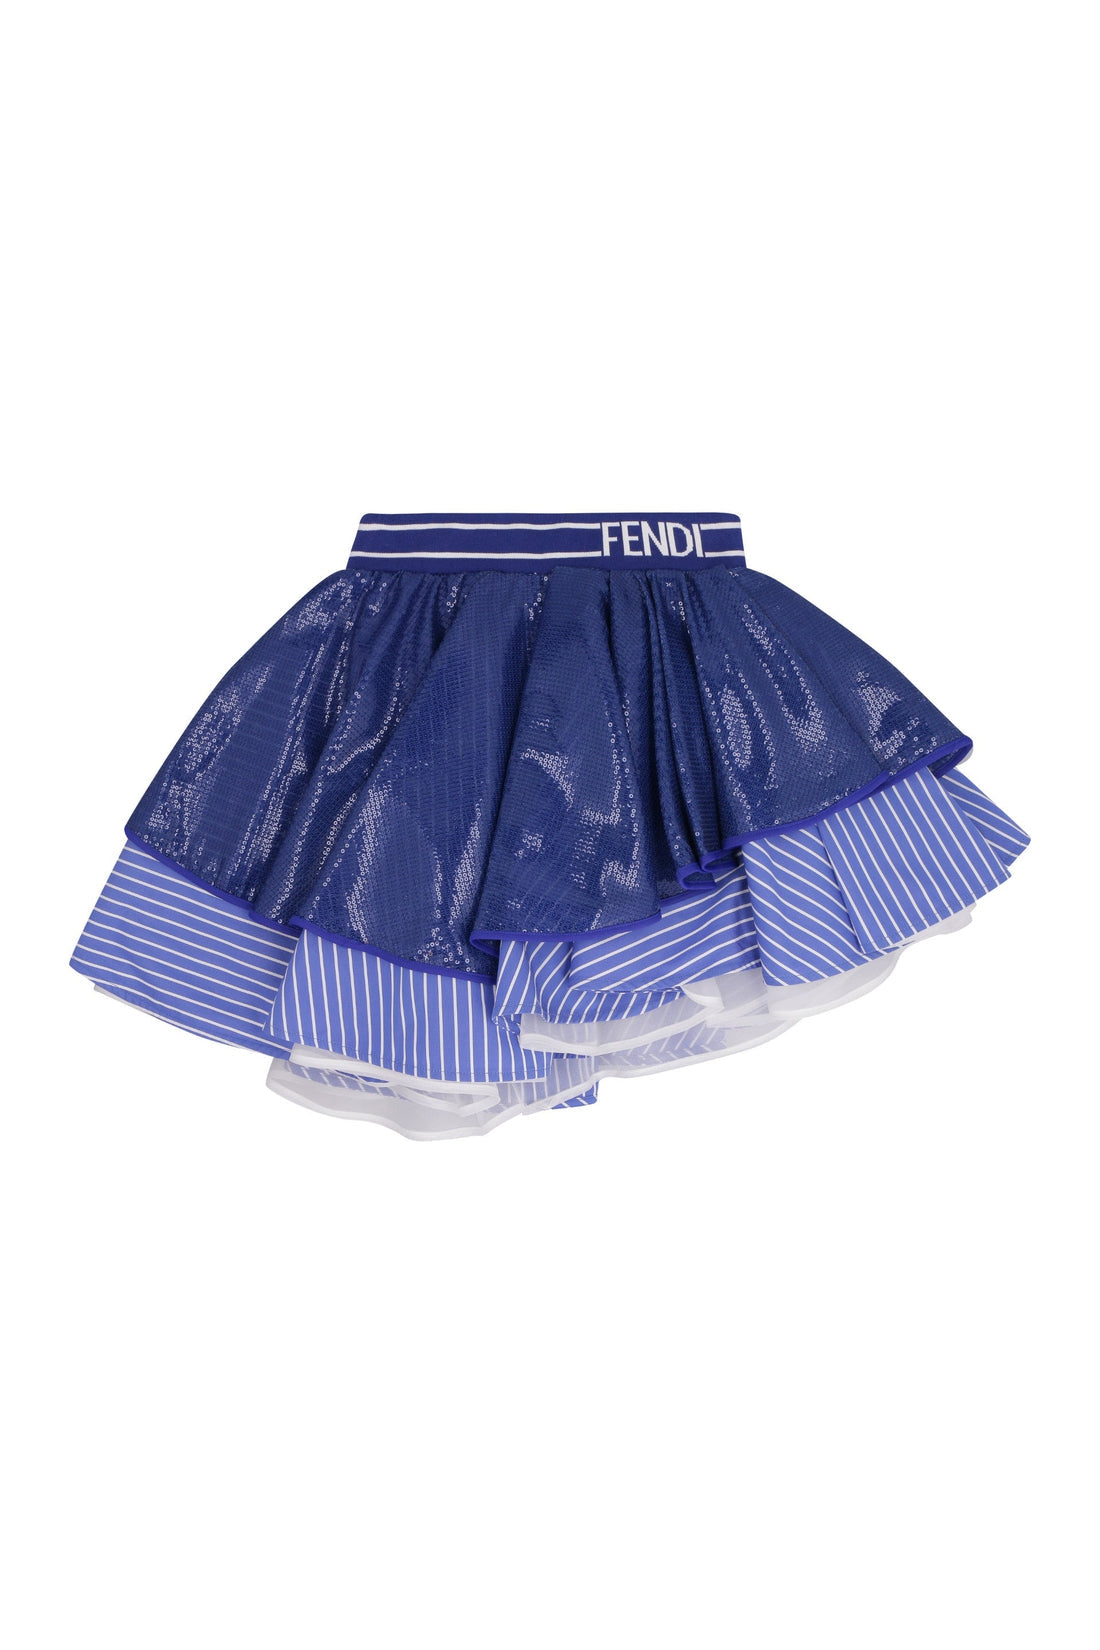 Piralo-OUTLET-SALE-Full skirt-ARCHIVIST